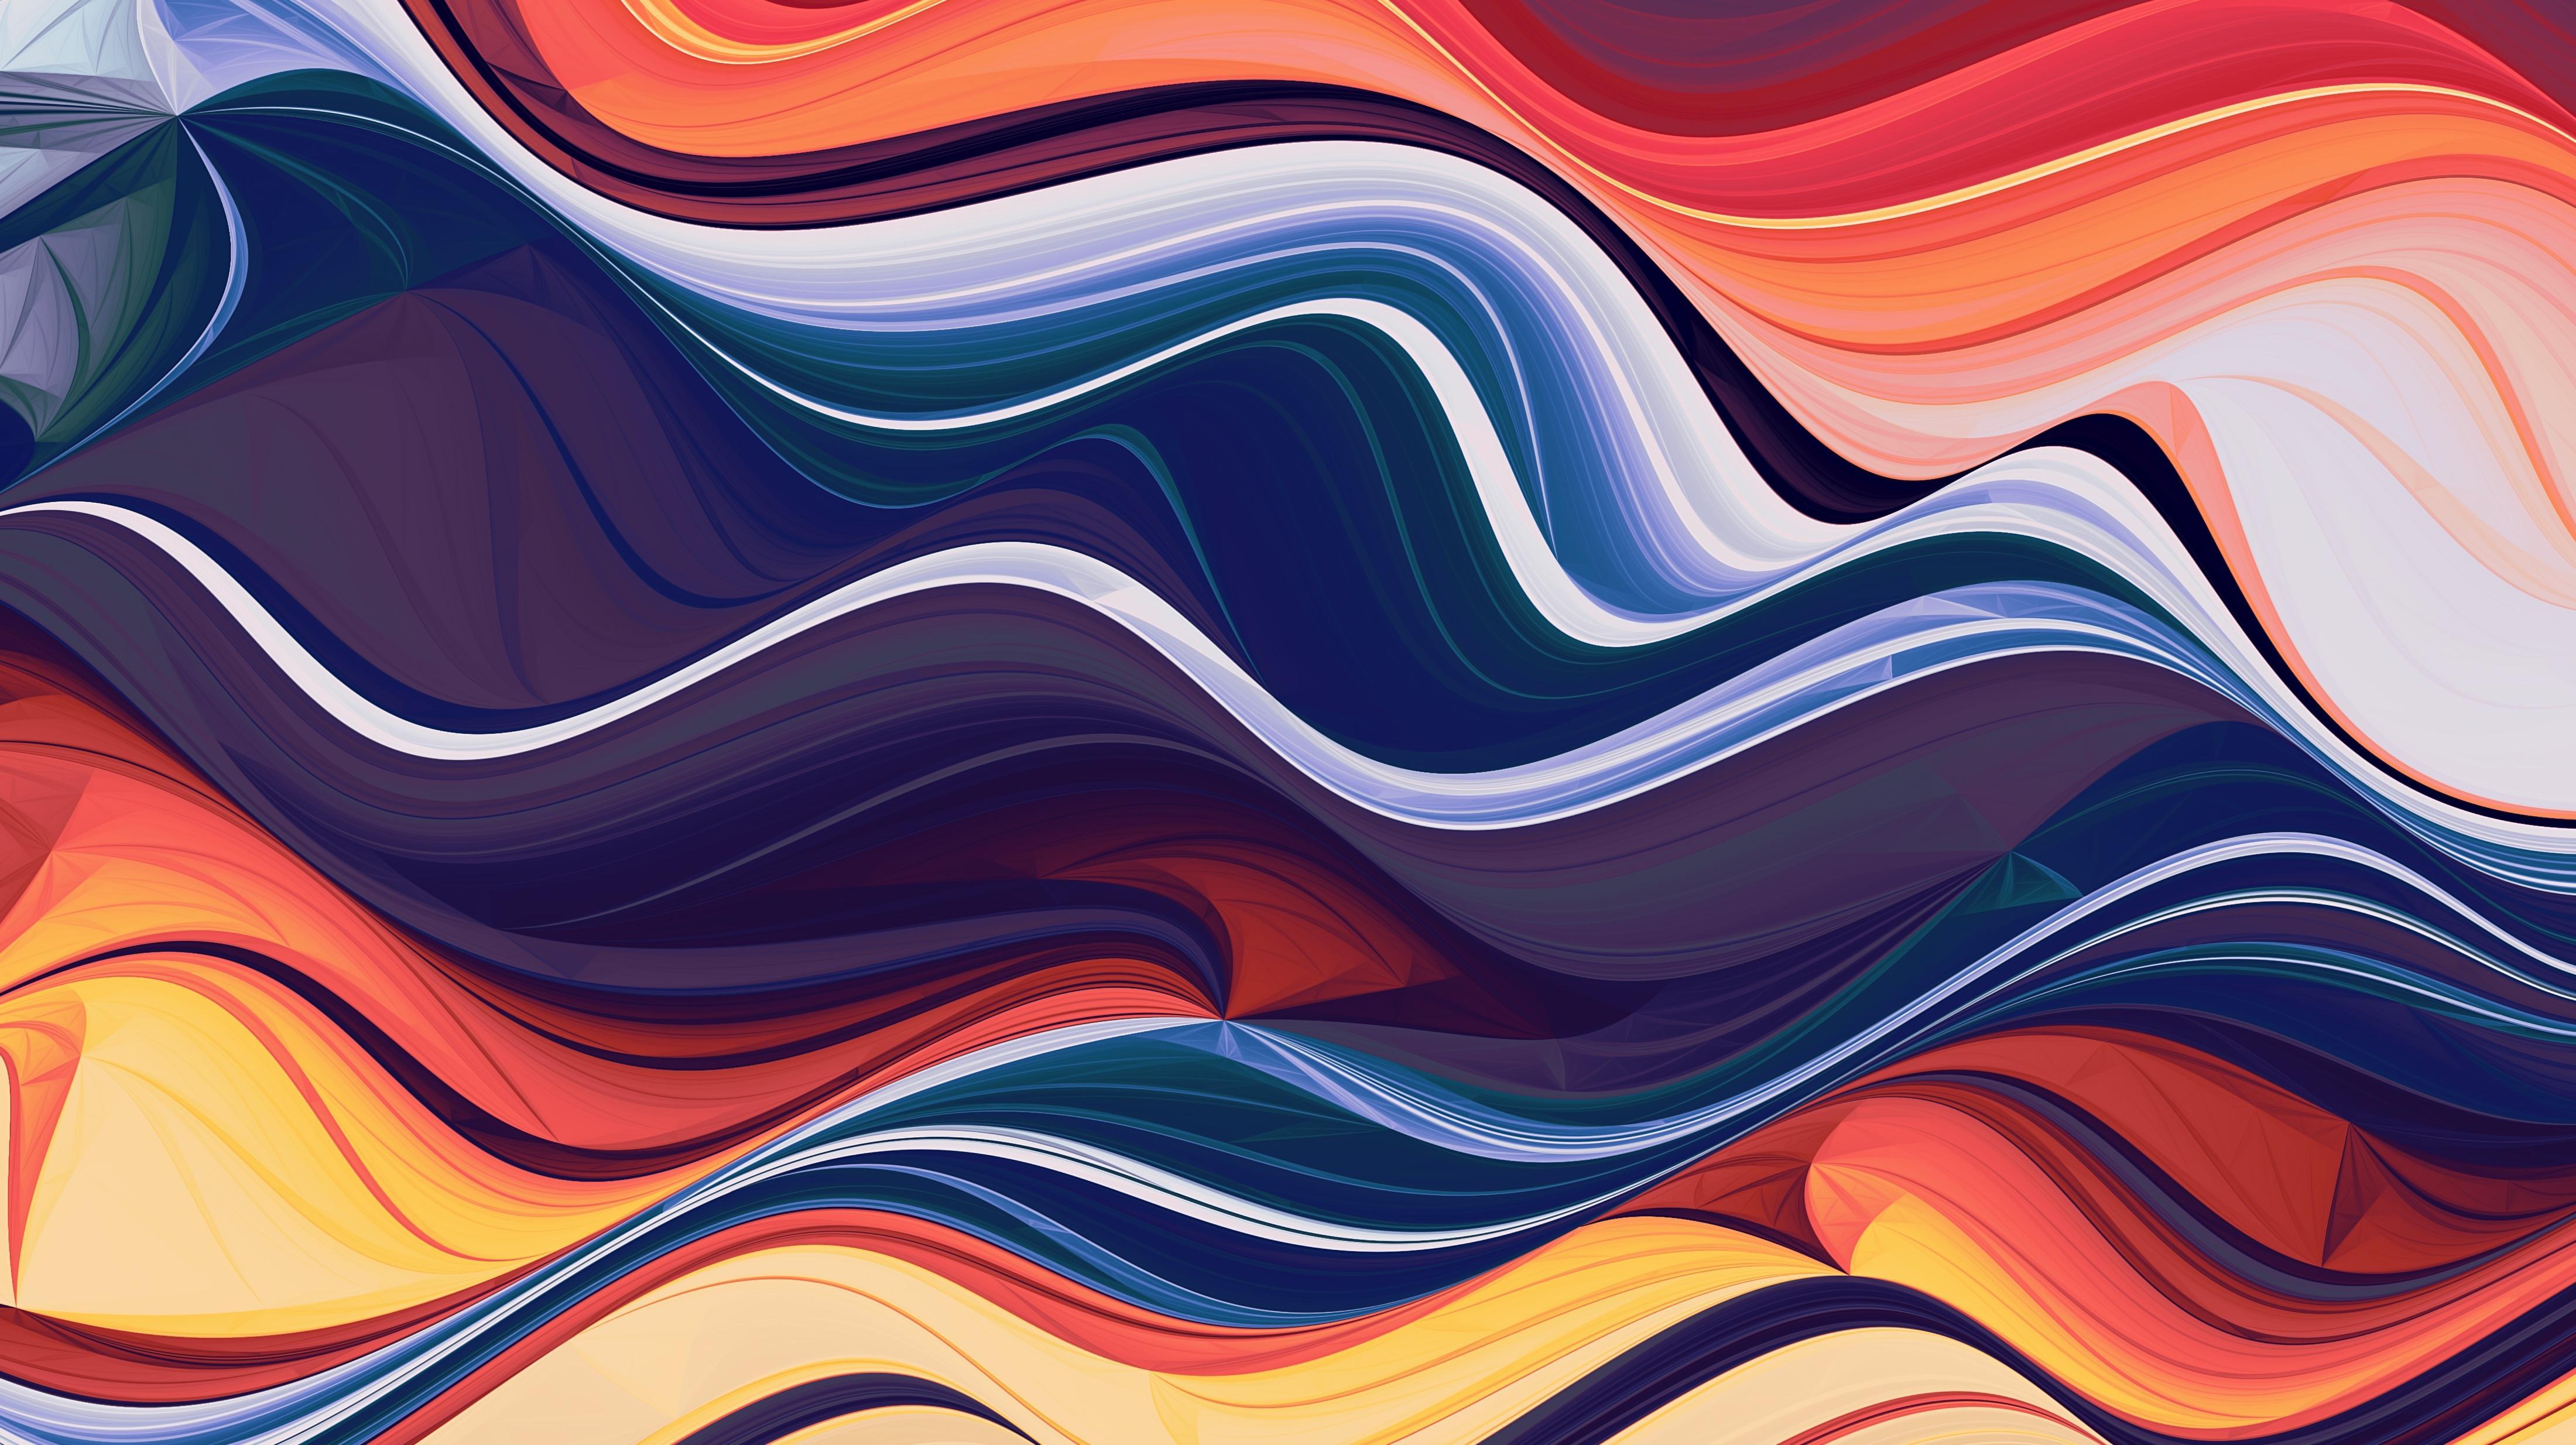 Abstract Wave Hd Digital Art 2021 Wallpapers